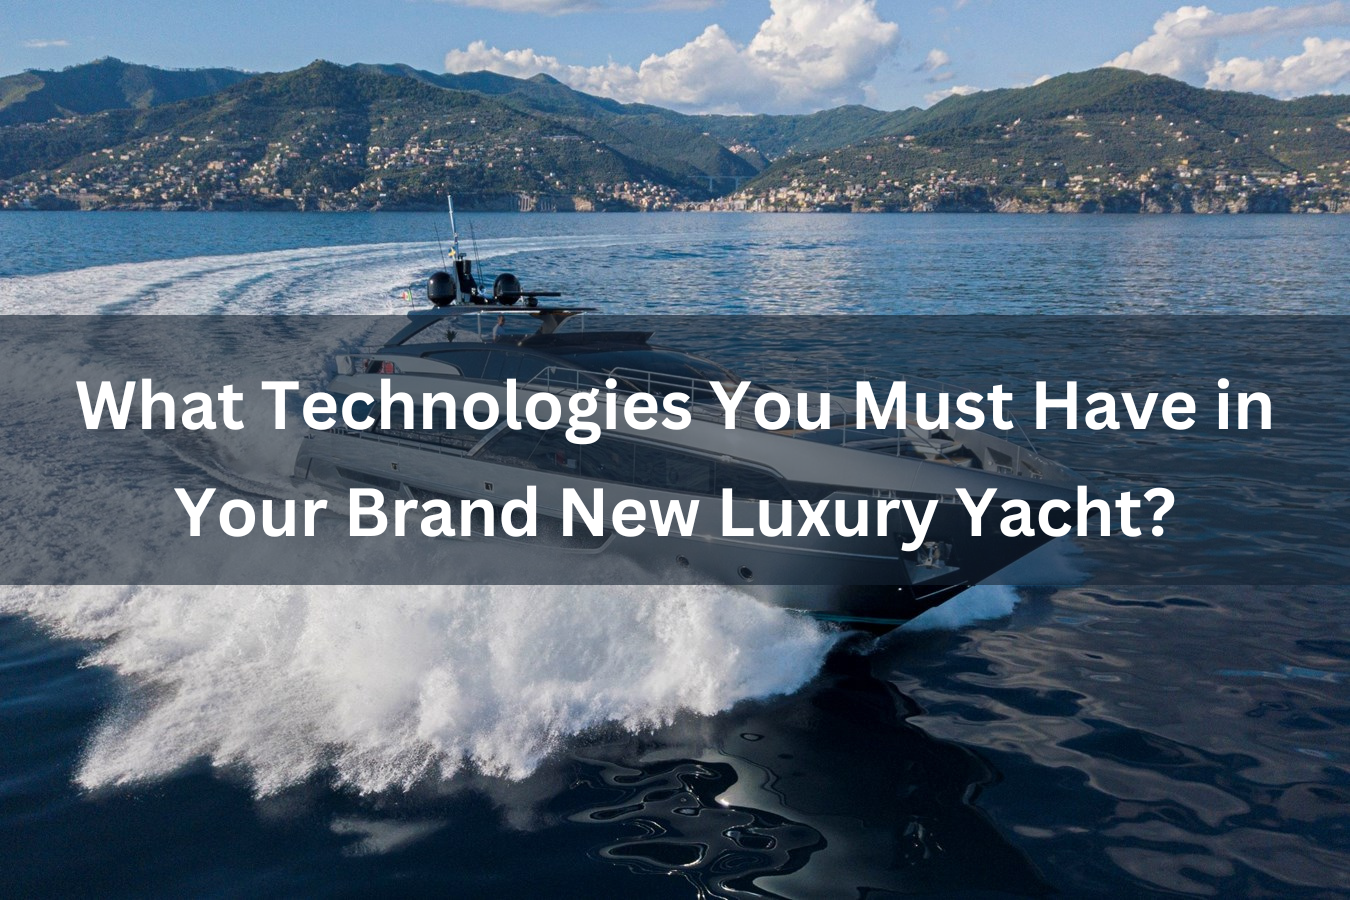 Technologies for Luxury Yacht | edtechreader